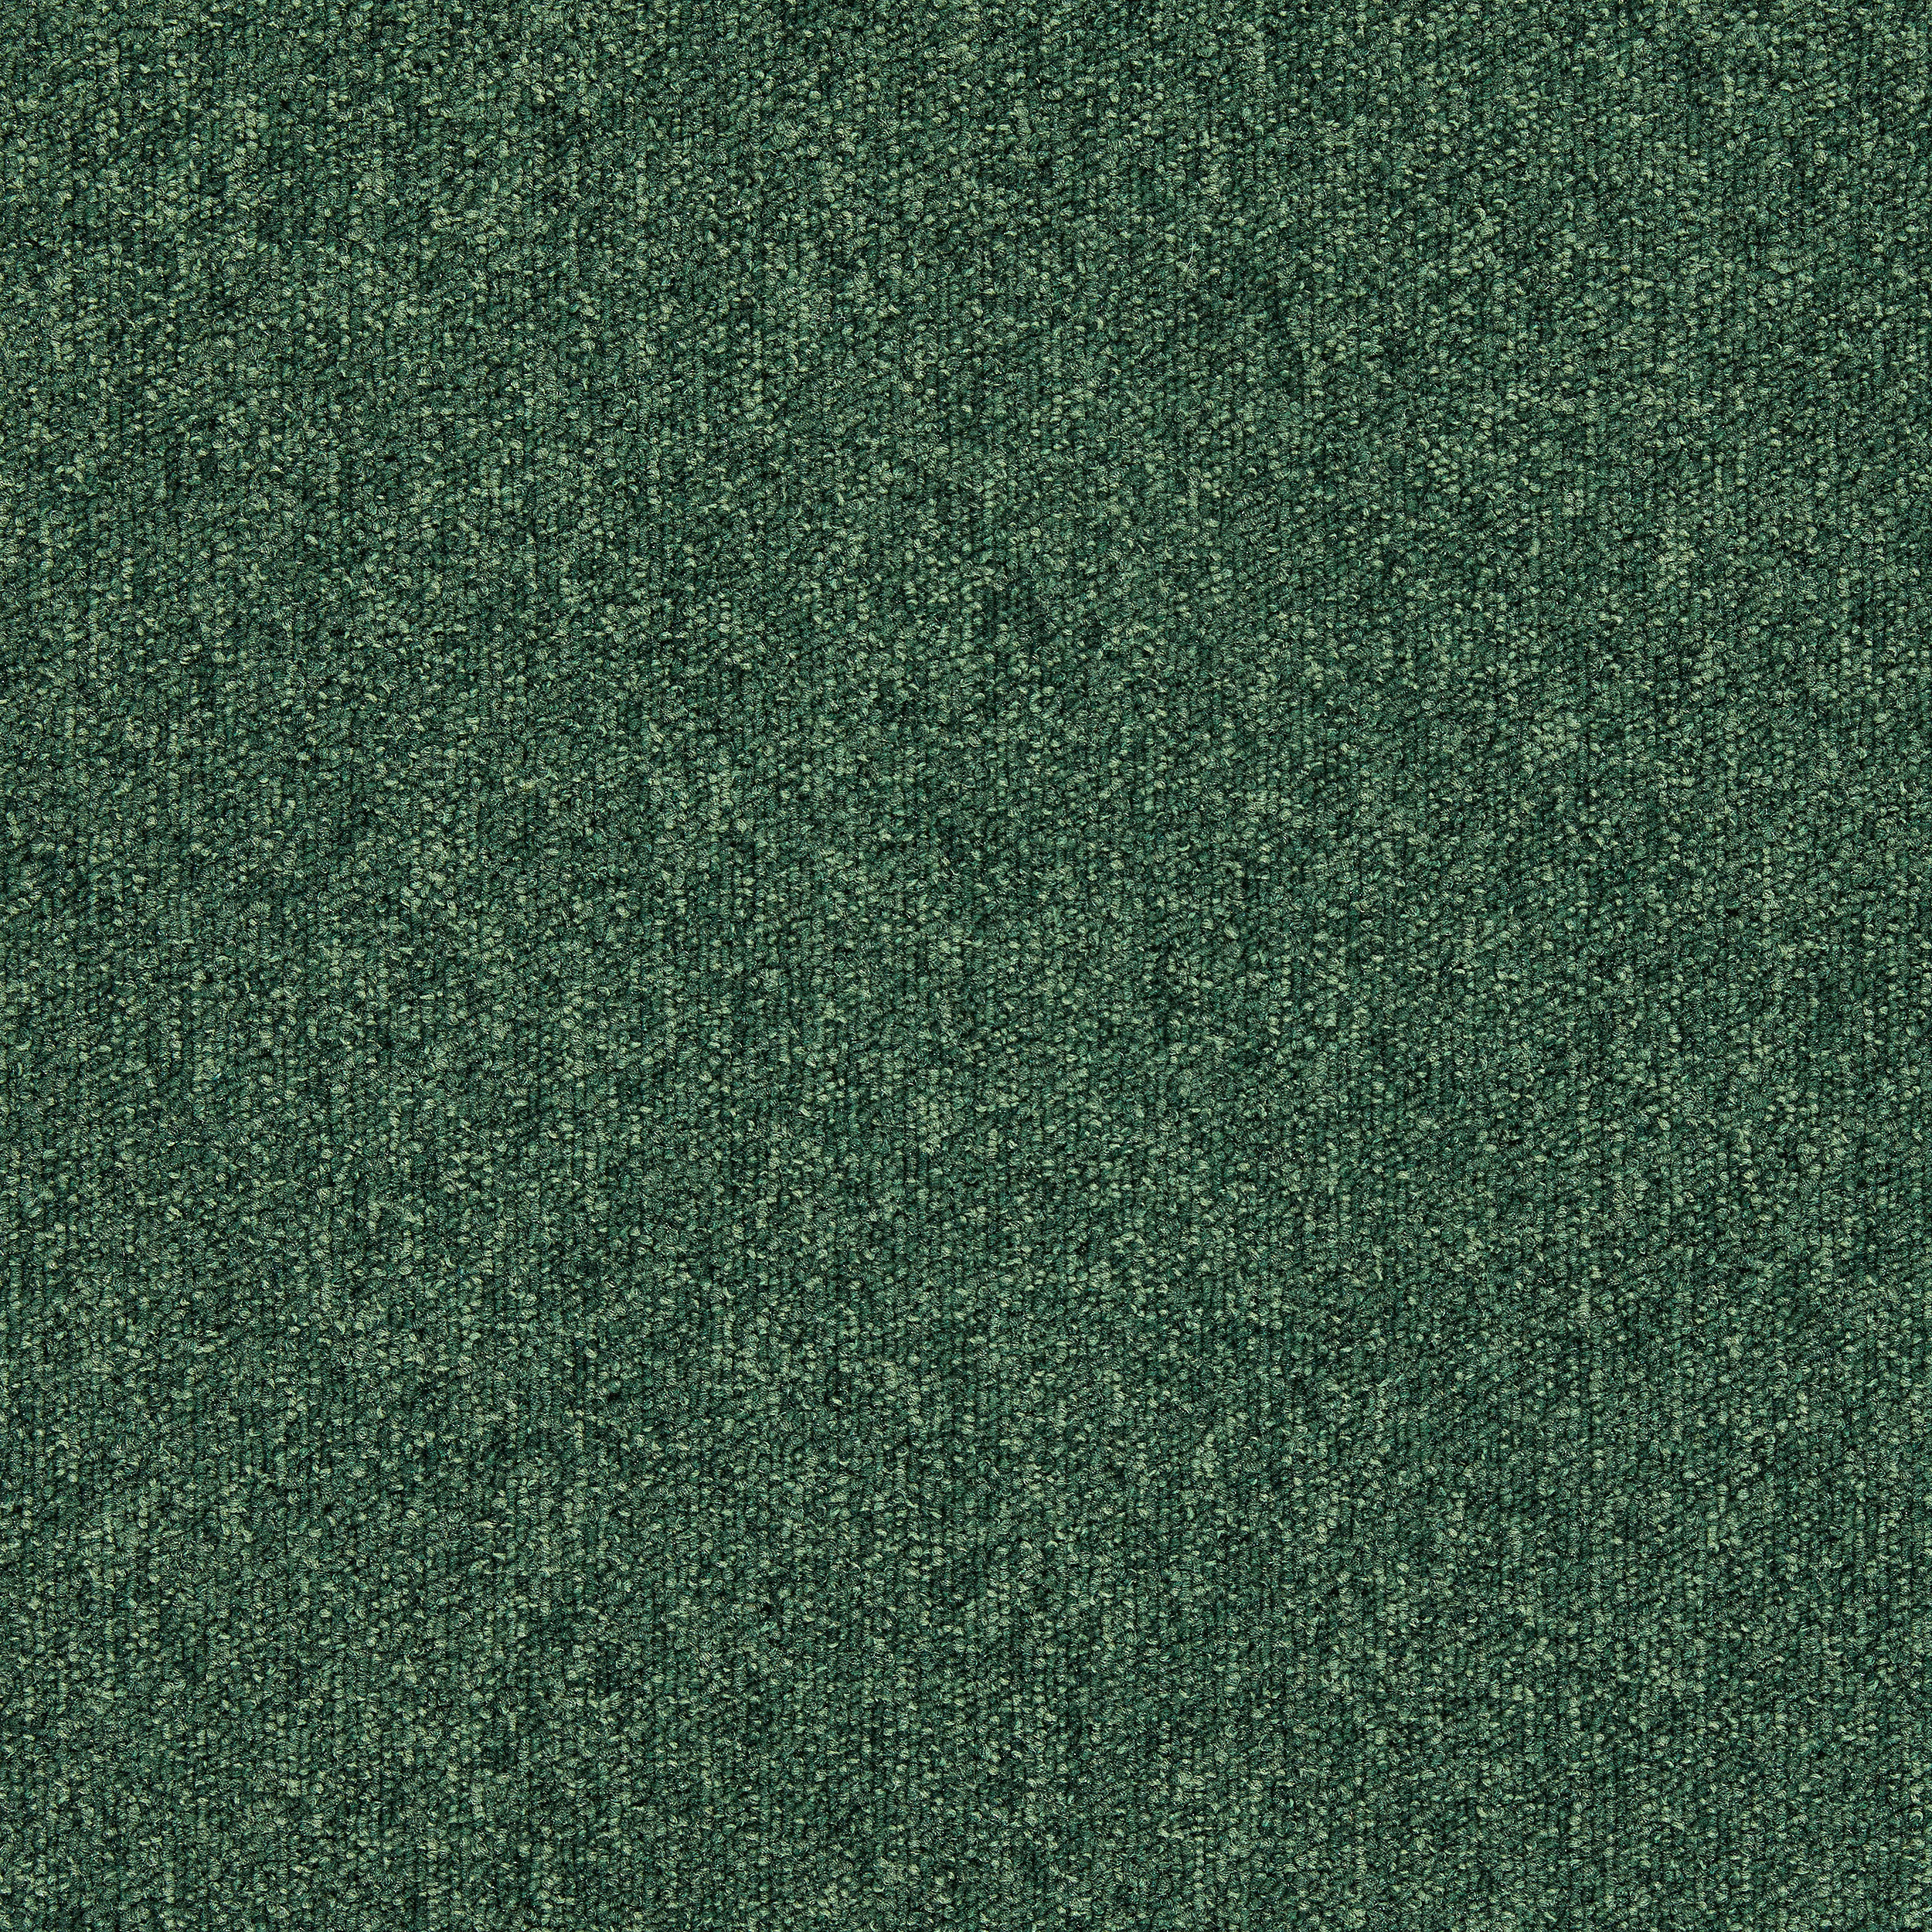 Heuga 727 Carpet Tile In Bottle Green número de imagen 15